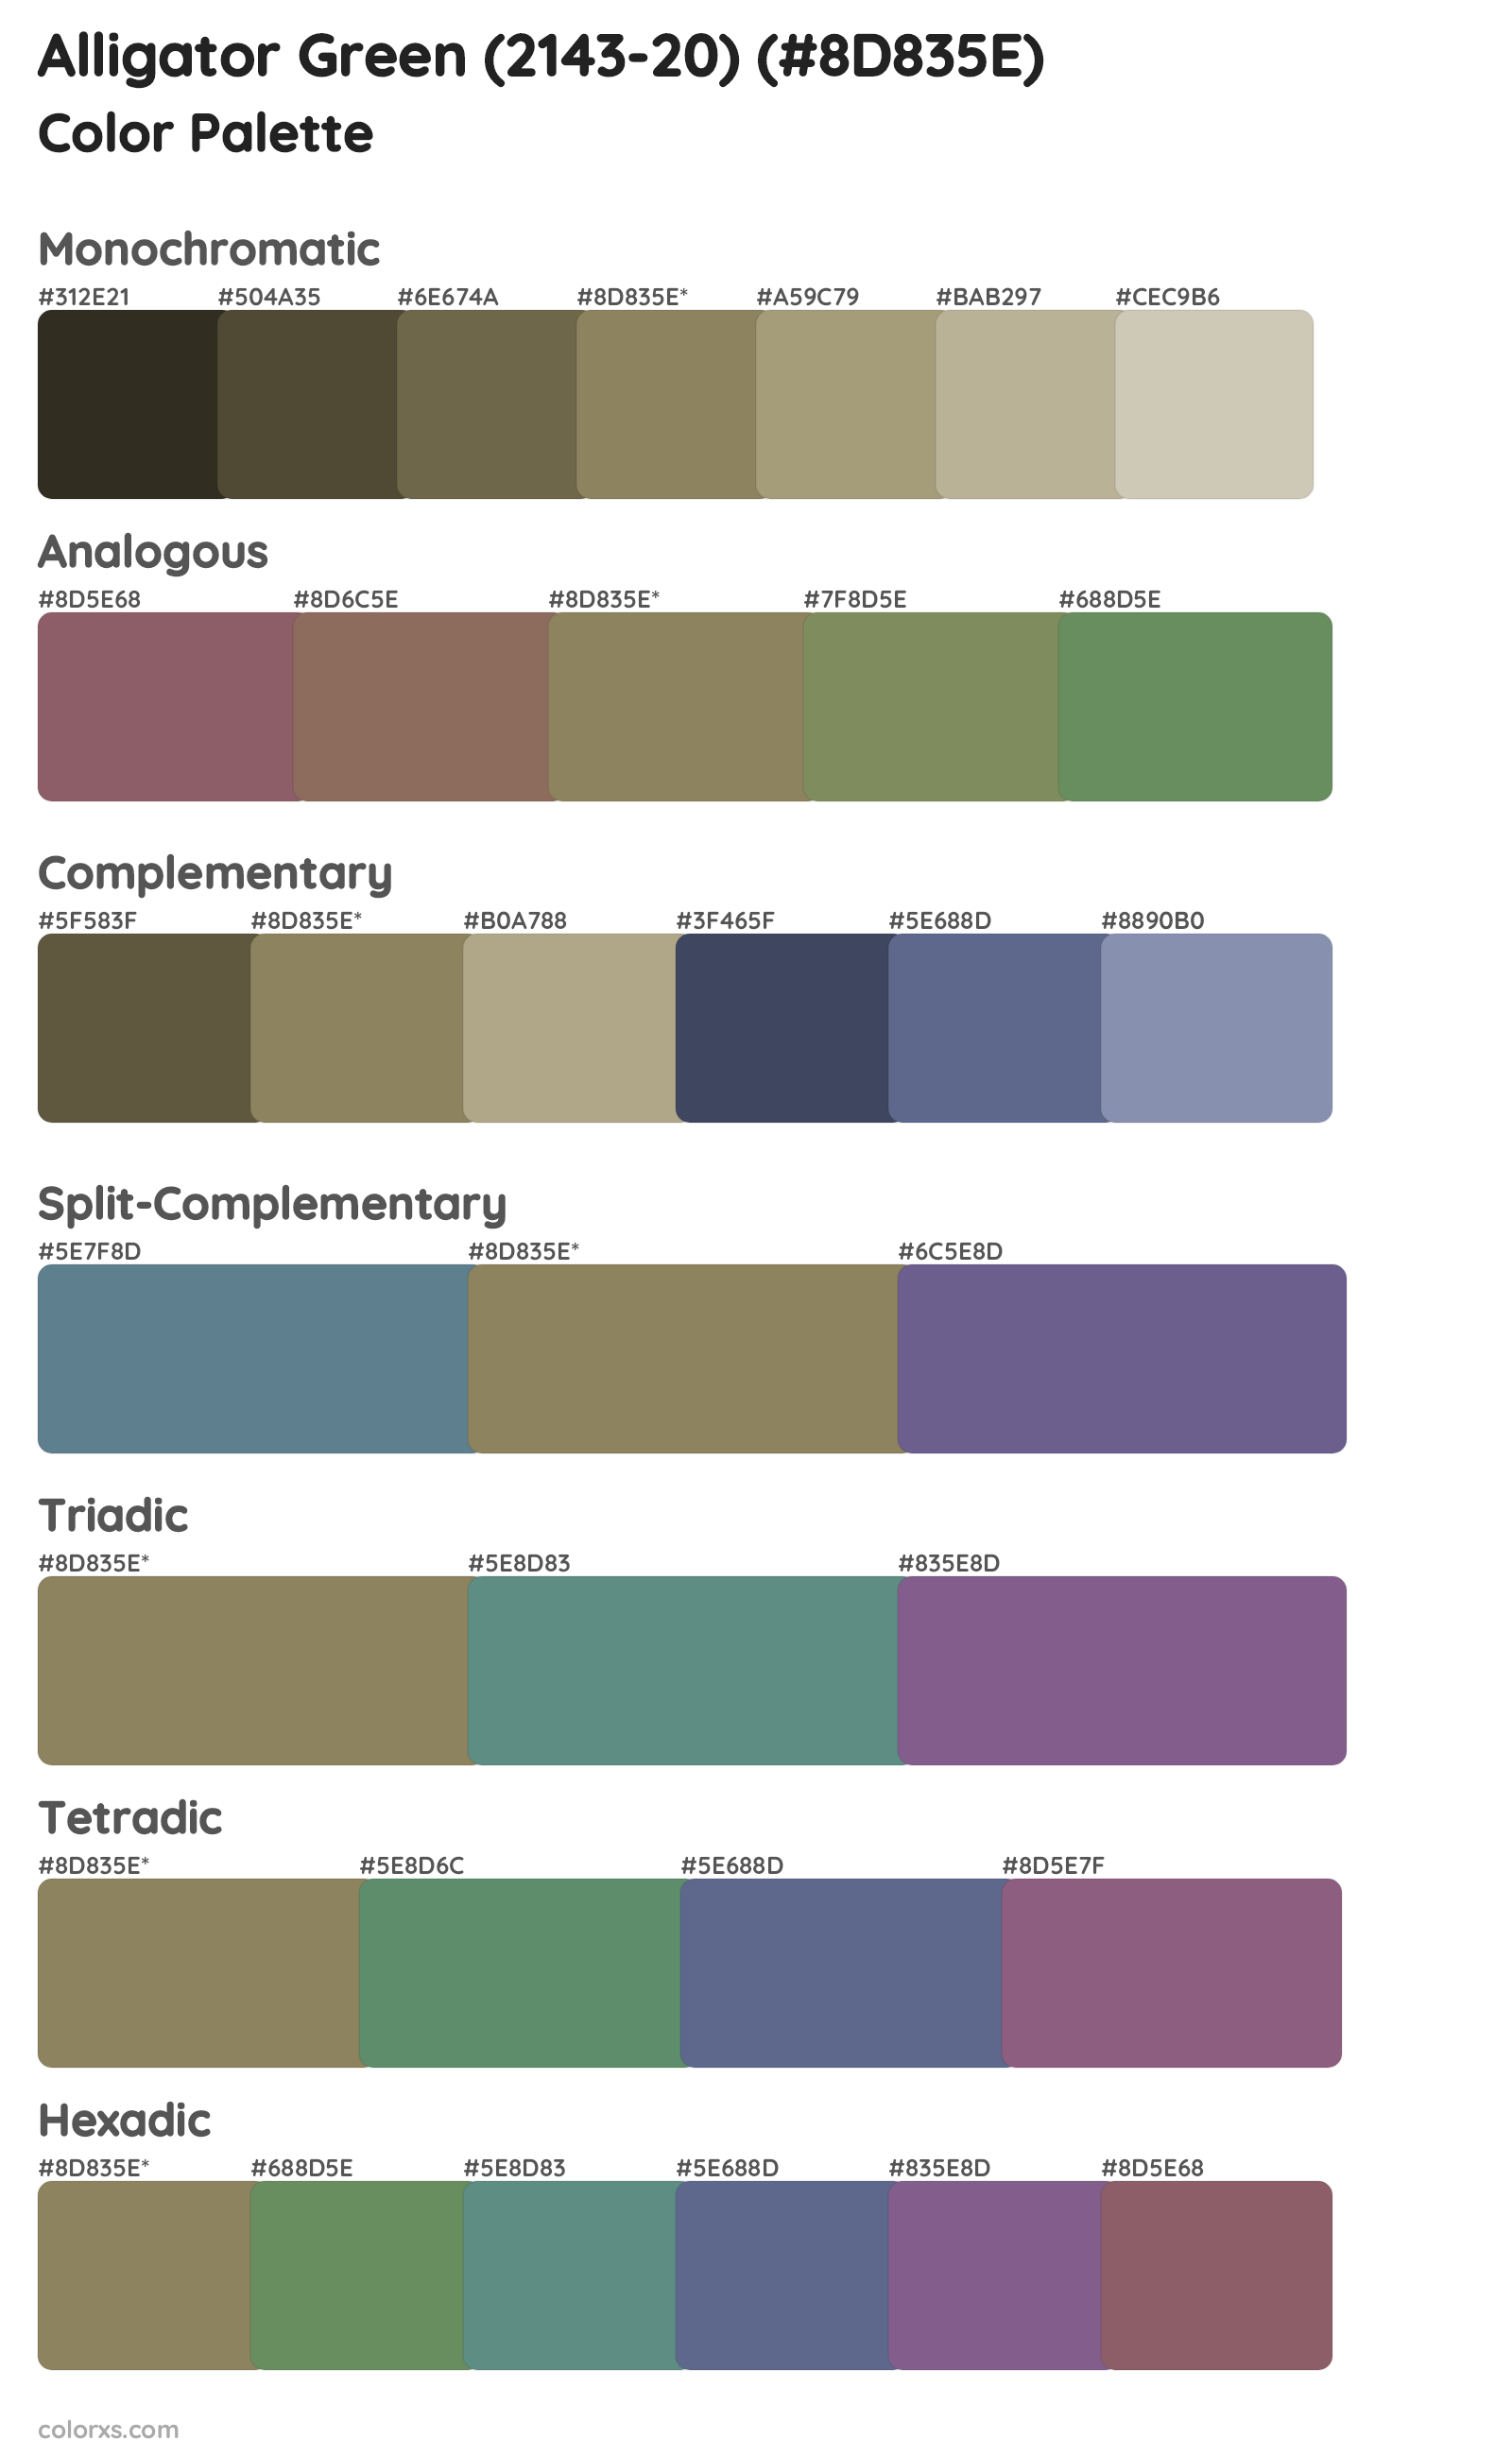 Alligator Green (2143-20) Color Scheme Palettes